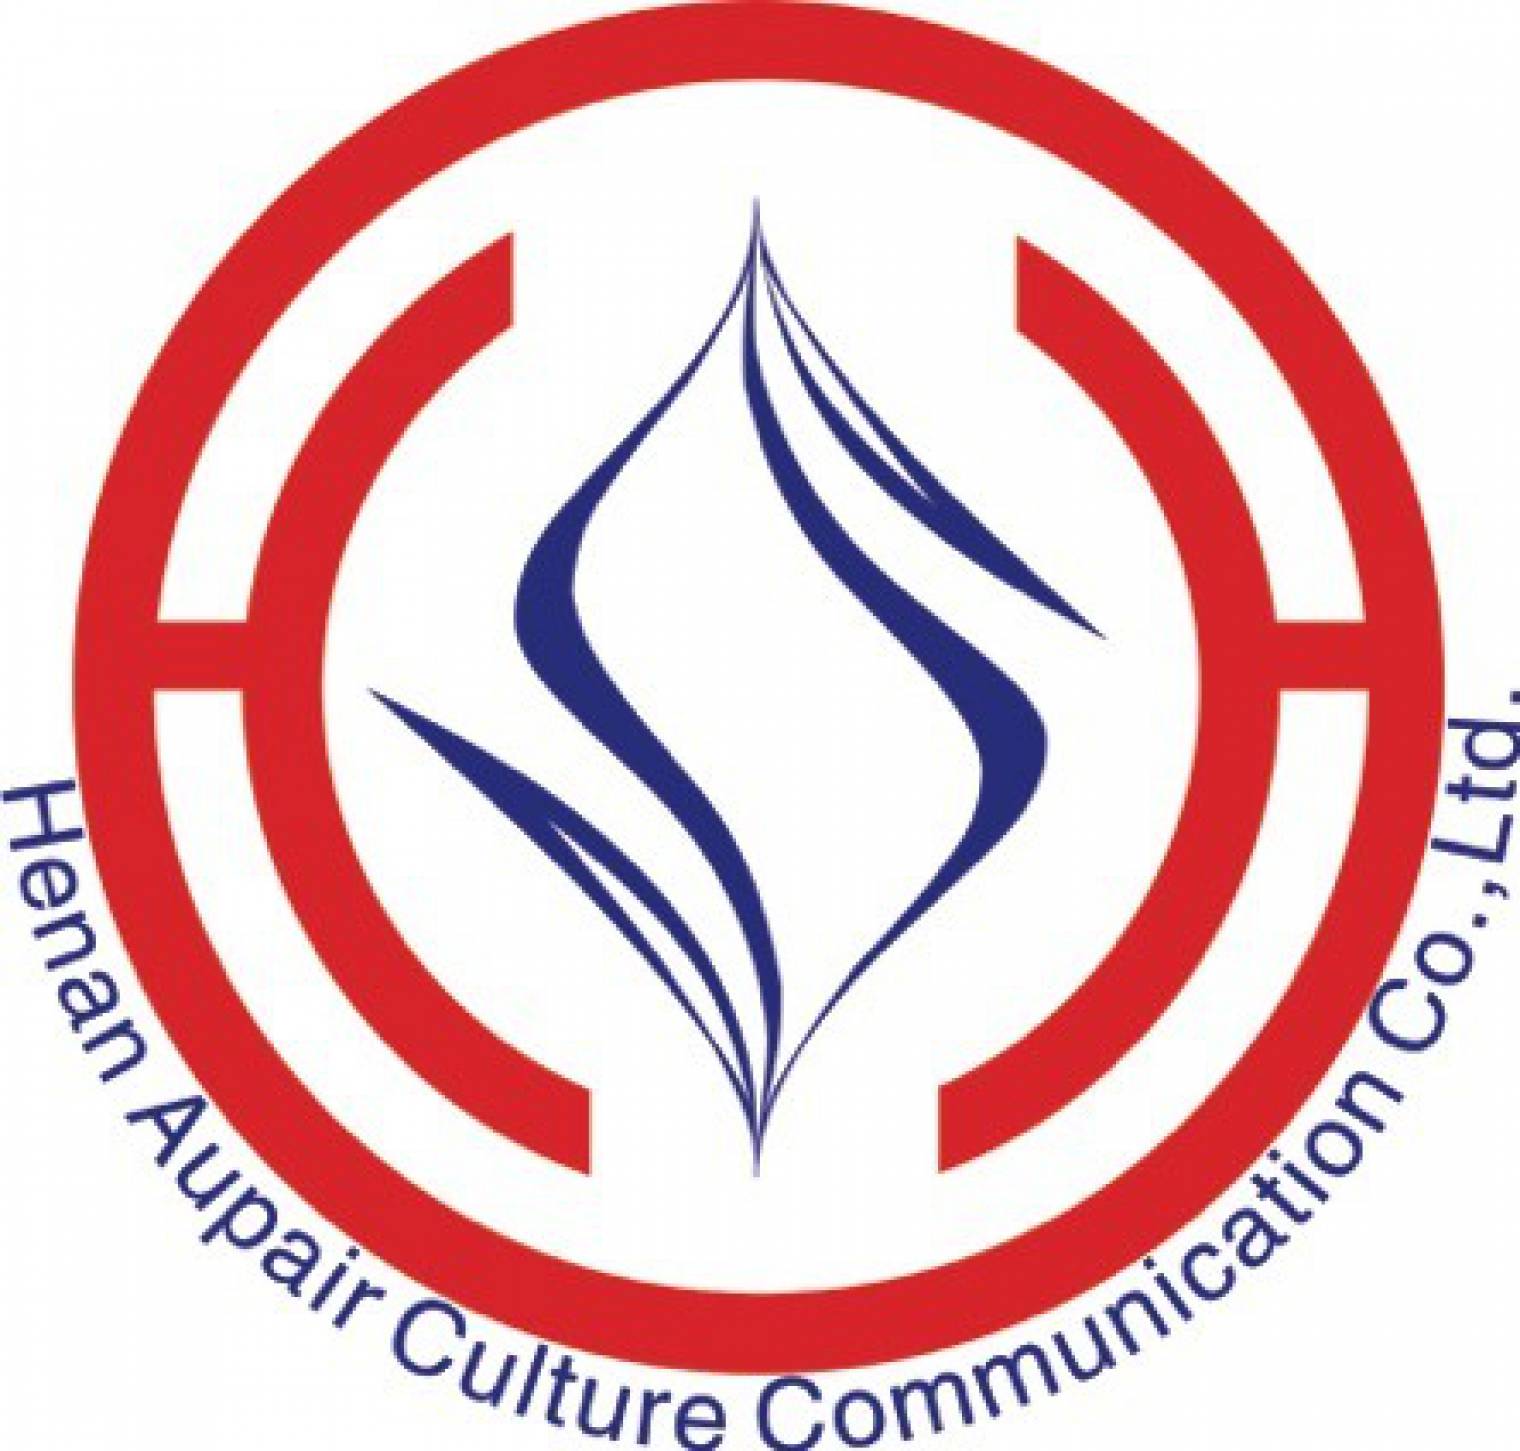 Henan Aupair Culture Communication joins IAPA as Full Voting member